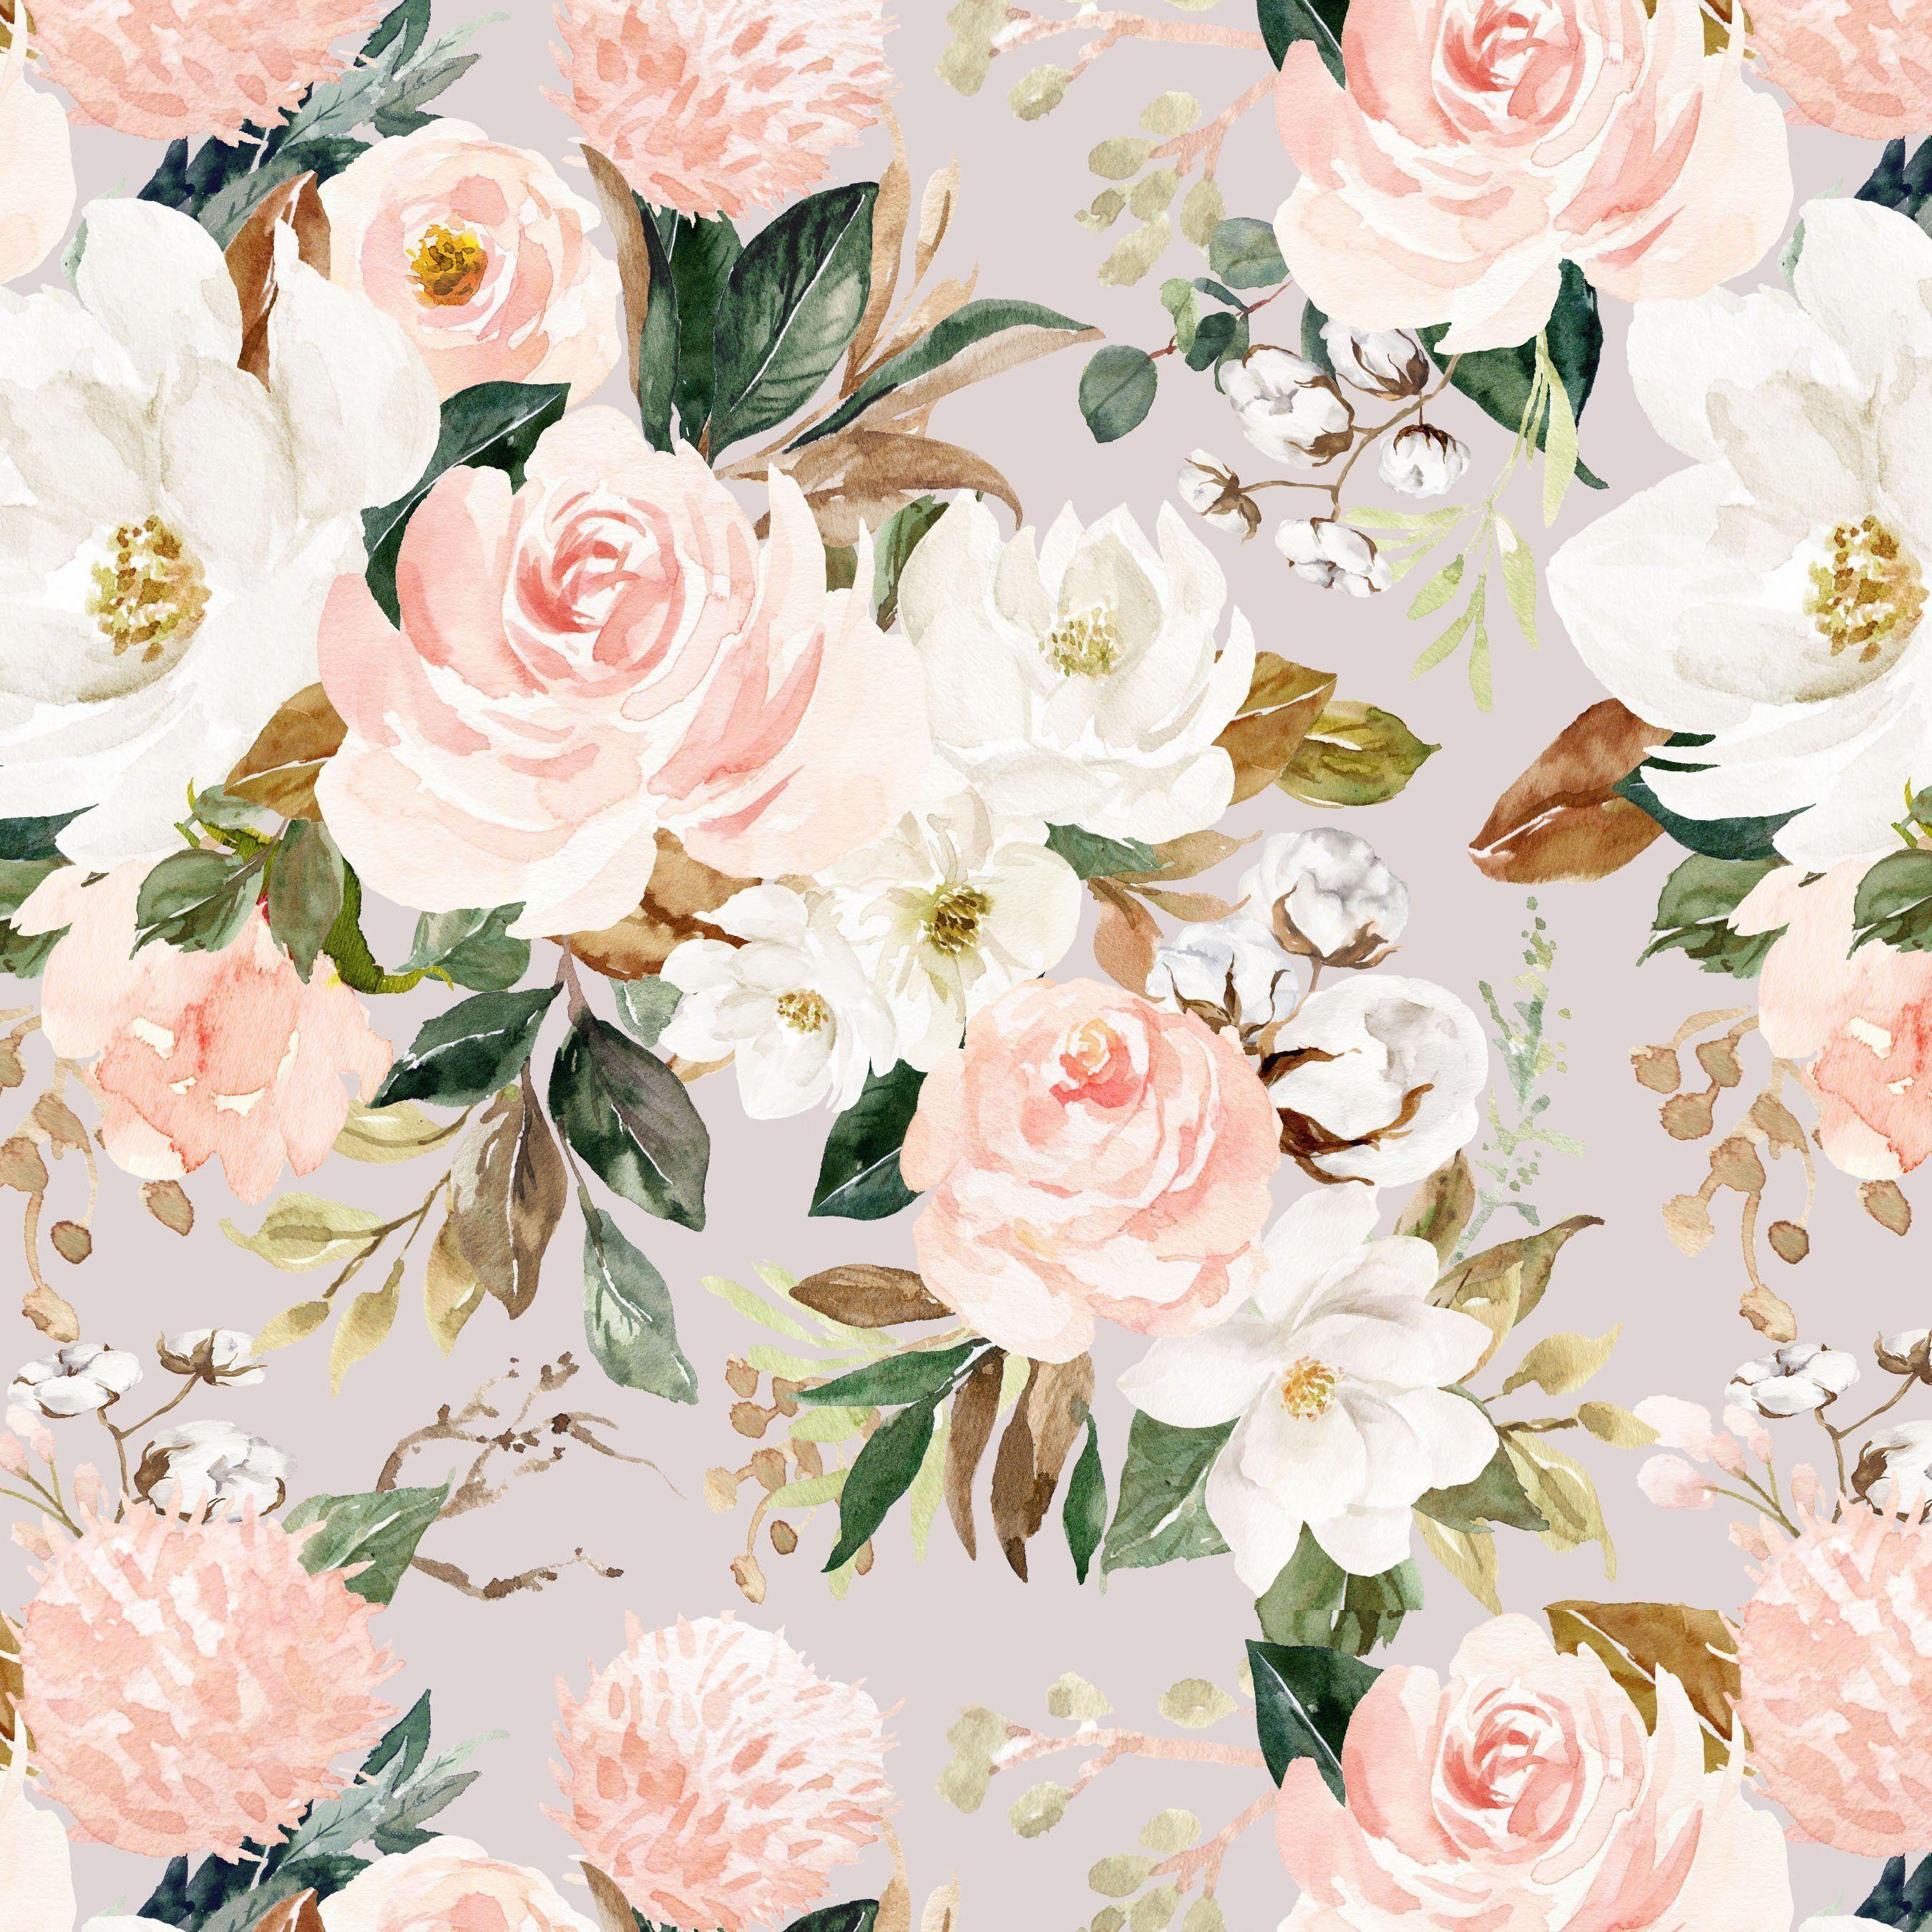 PixLith - Boho Flower Background